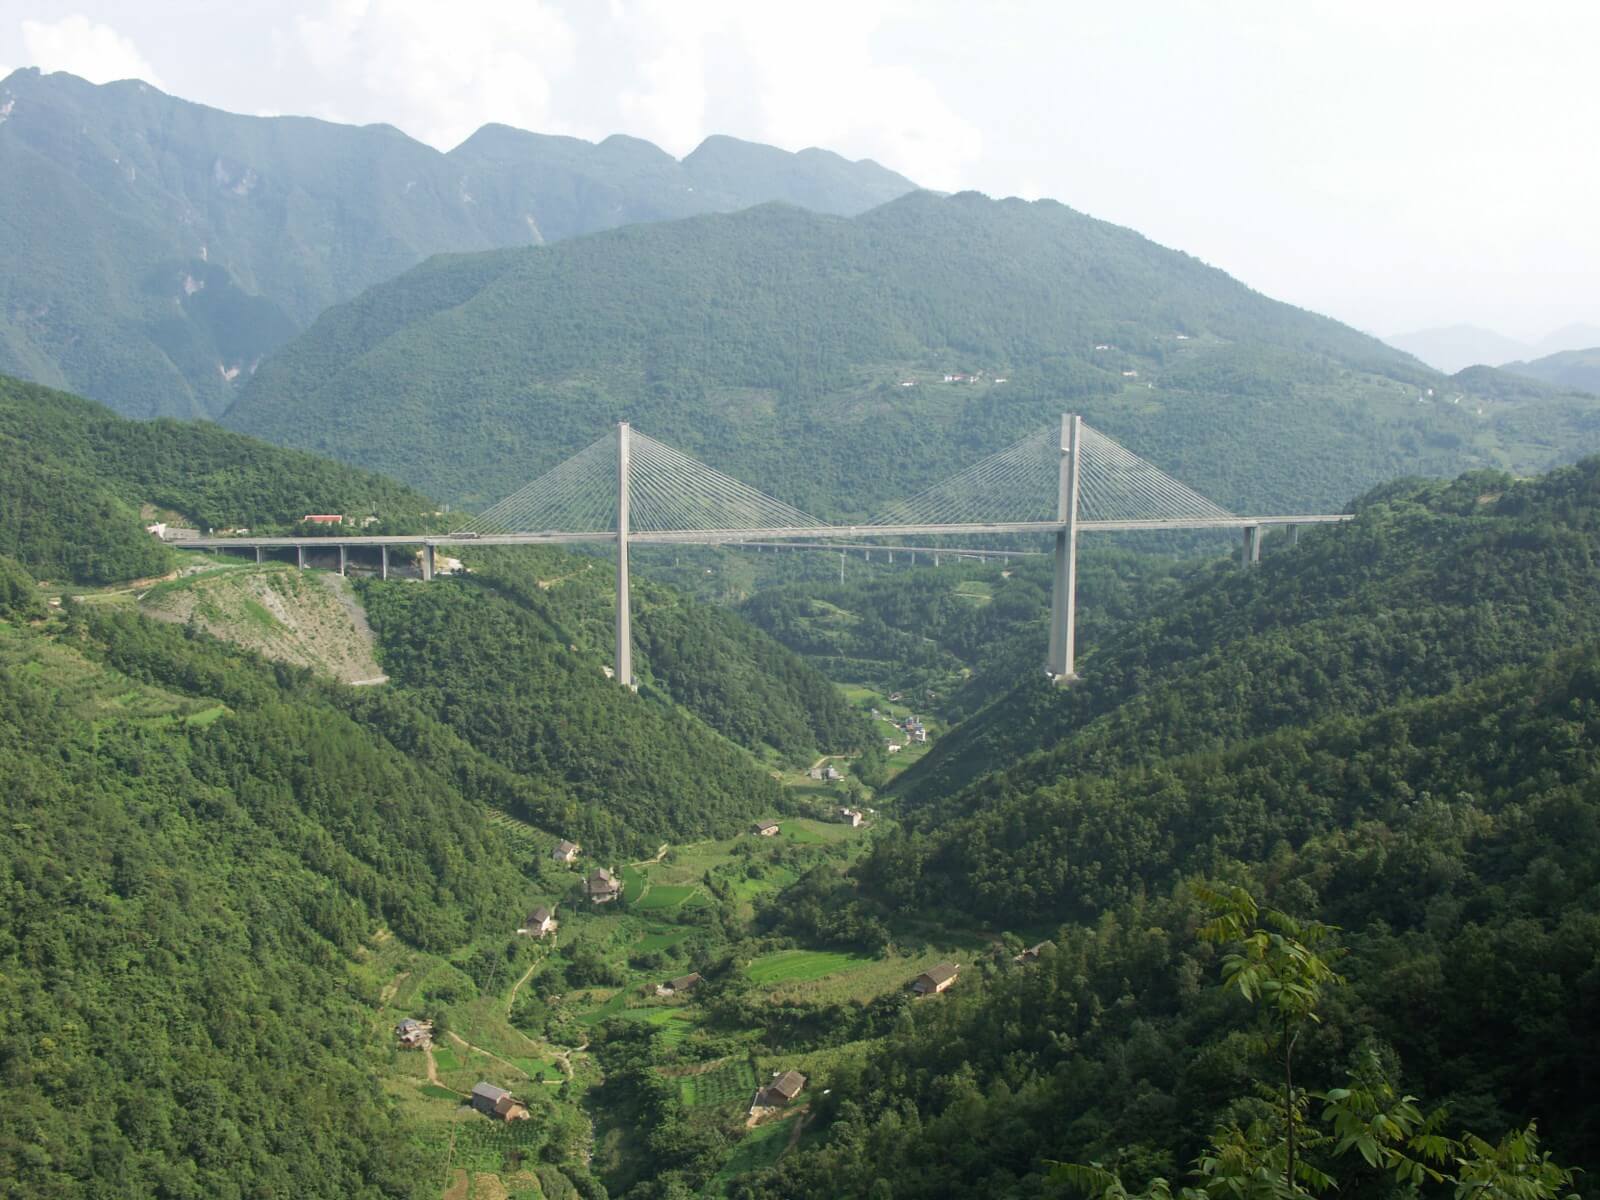 Tallest bridge in the world